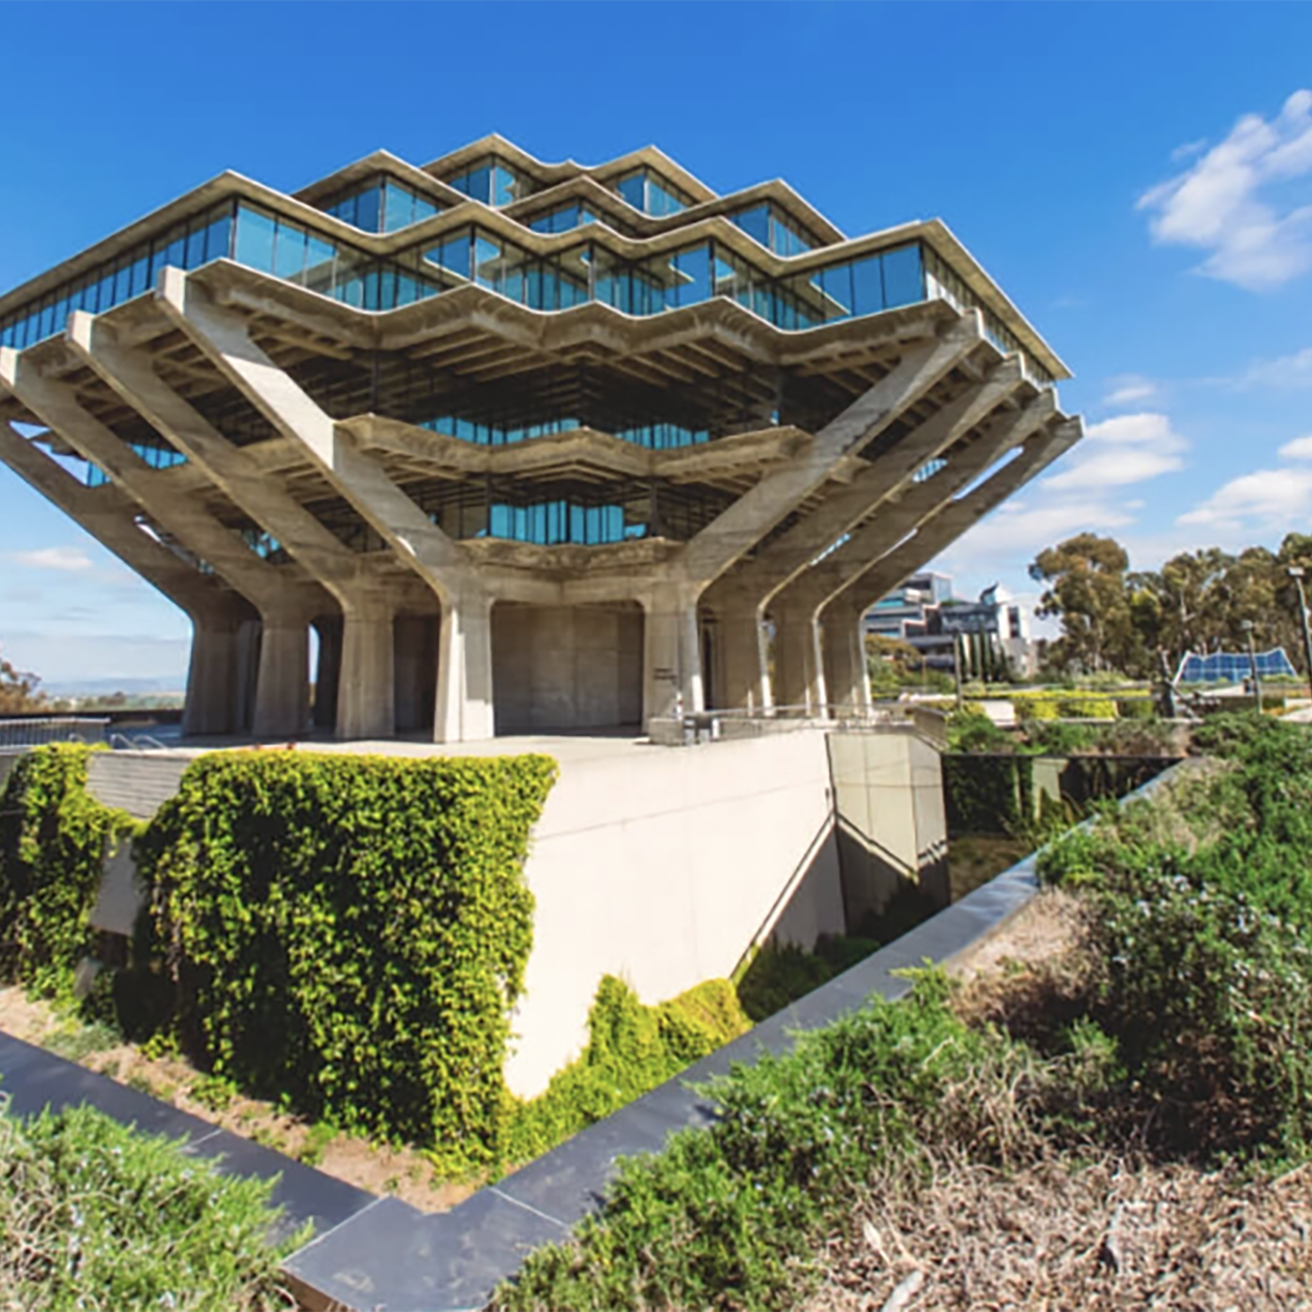 University of California, San Diego campus